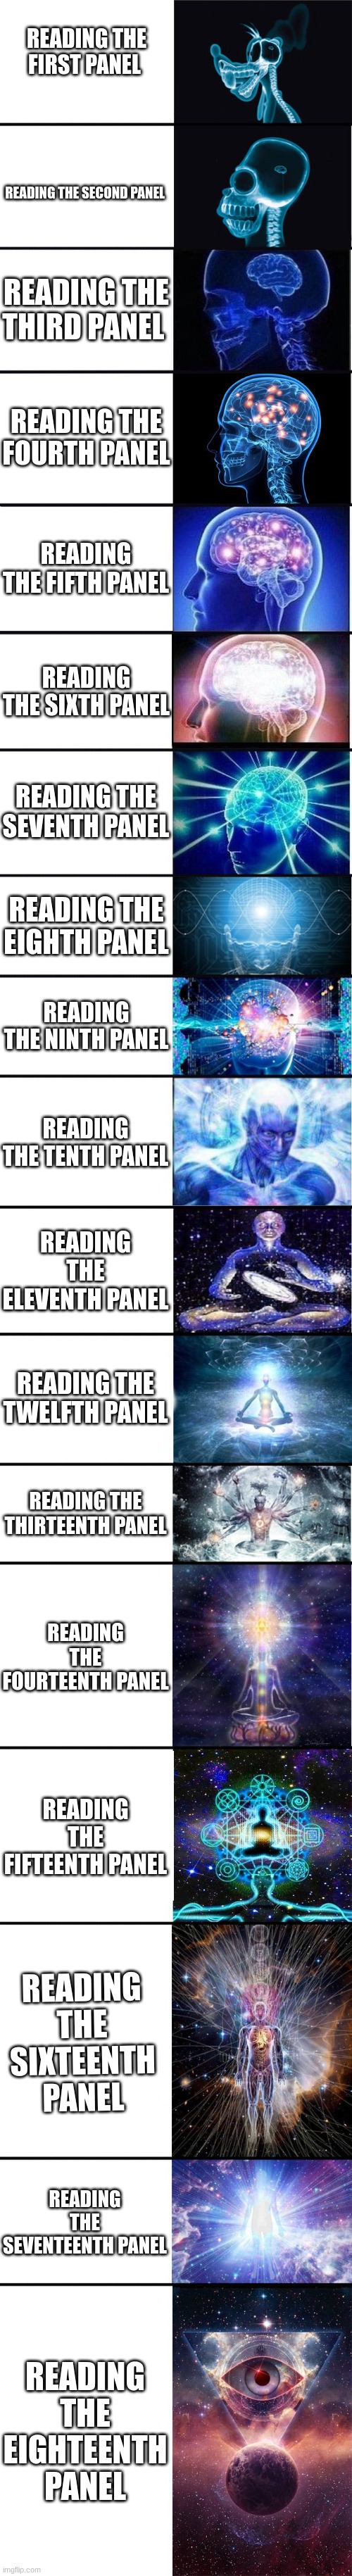 expanding brain: 9001 | READING THE FIRST PANEL; READING THE SECOND PANEL; READING THE THIRD PANEL; READING THE FOURTH PANEL; READING THE FIFTH PANEL; READING THE SIXTH PANEL; READING THE SEVENTH PANEL; READING THE EIGHTH PANEL; READING THE NINTH PANEL; READING THE TENTH PANEL; READING THE ELEVENTH PANEL; READING THE TWELFTH PANEL; READING THE THIRTEENTH PANEL; READING THE FOURTEENTH PANEL; READING THE FIFTEENTH PANEL; READING THE SIXTEENTH PANEL; READING THE SEVENTEENTH PANEL; READING THE EIGHTEENTH PANEL | image tagged in expanding brain 9001 | made w/ Imgflip meme maker